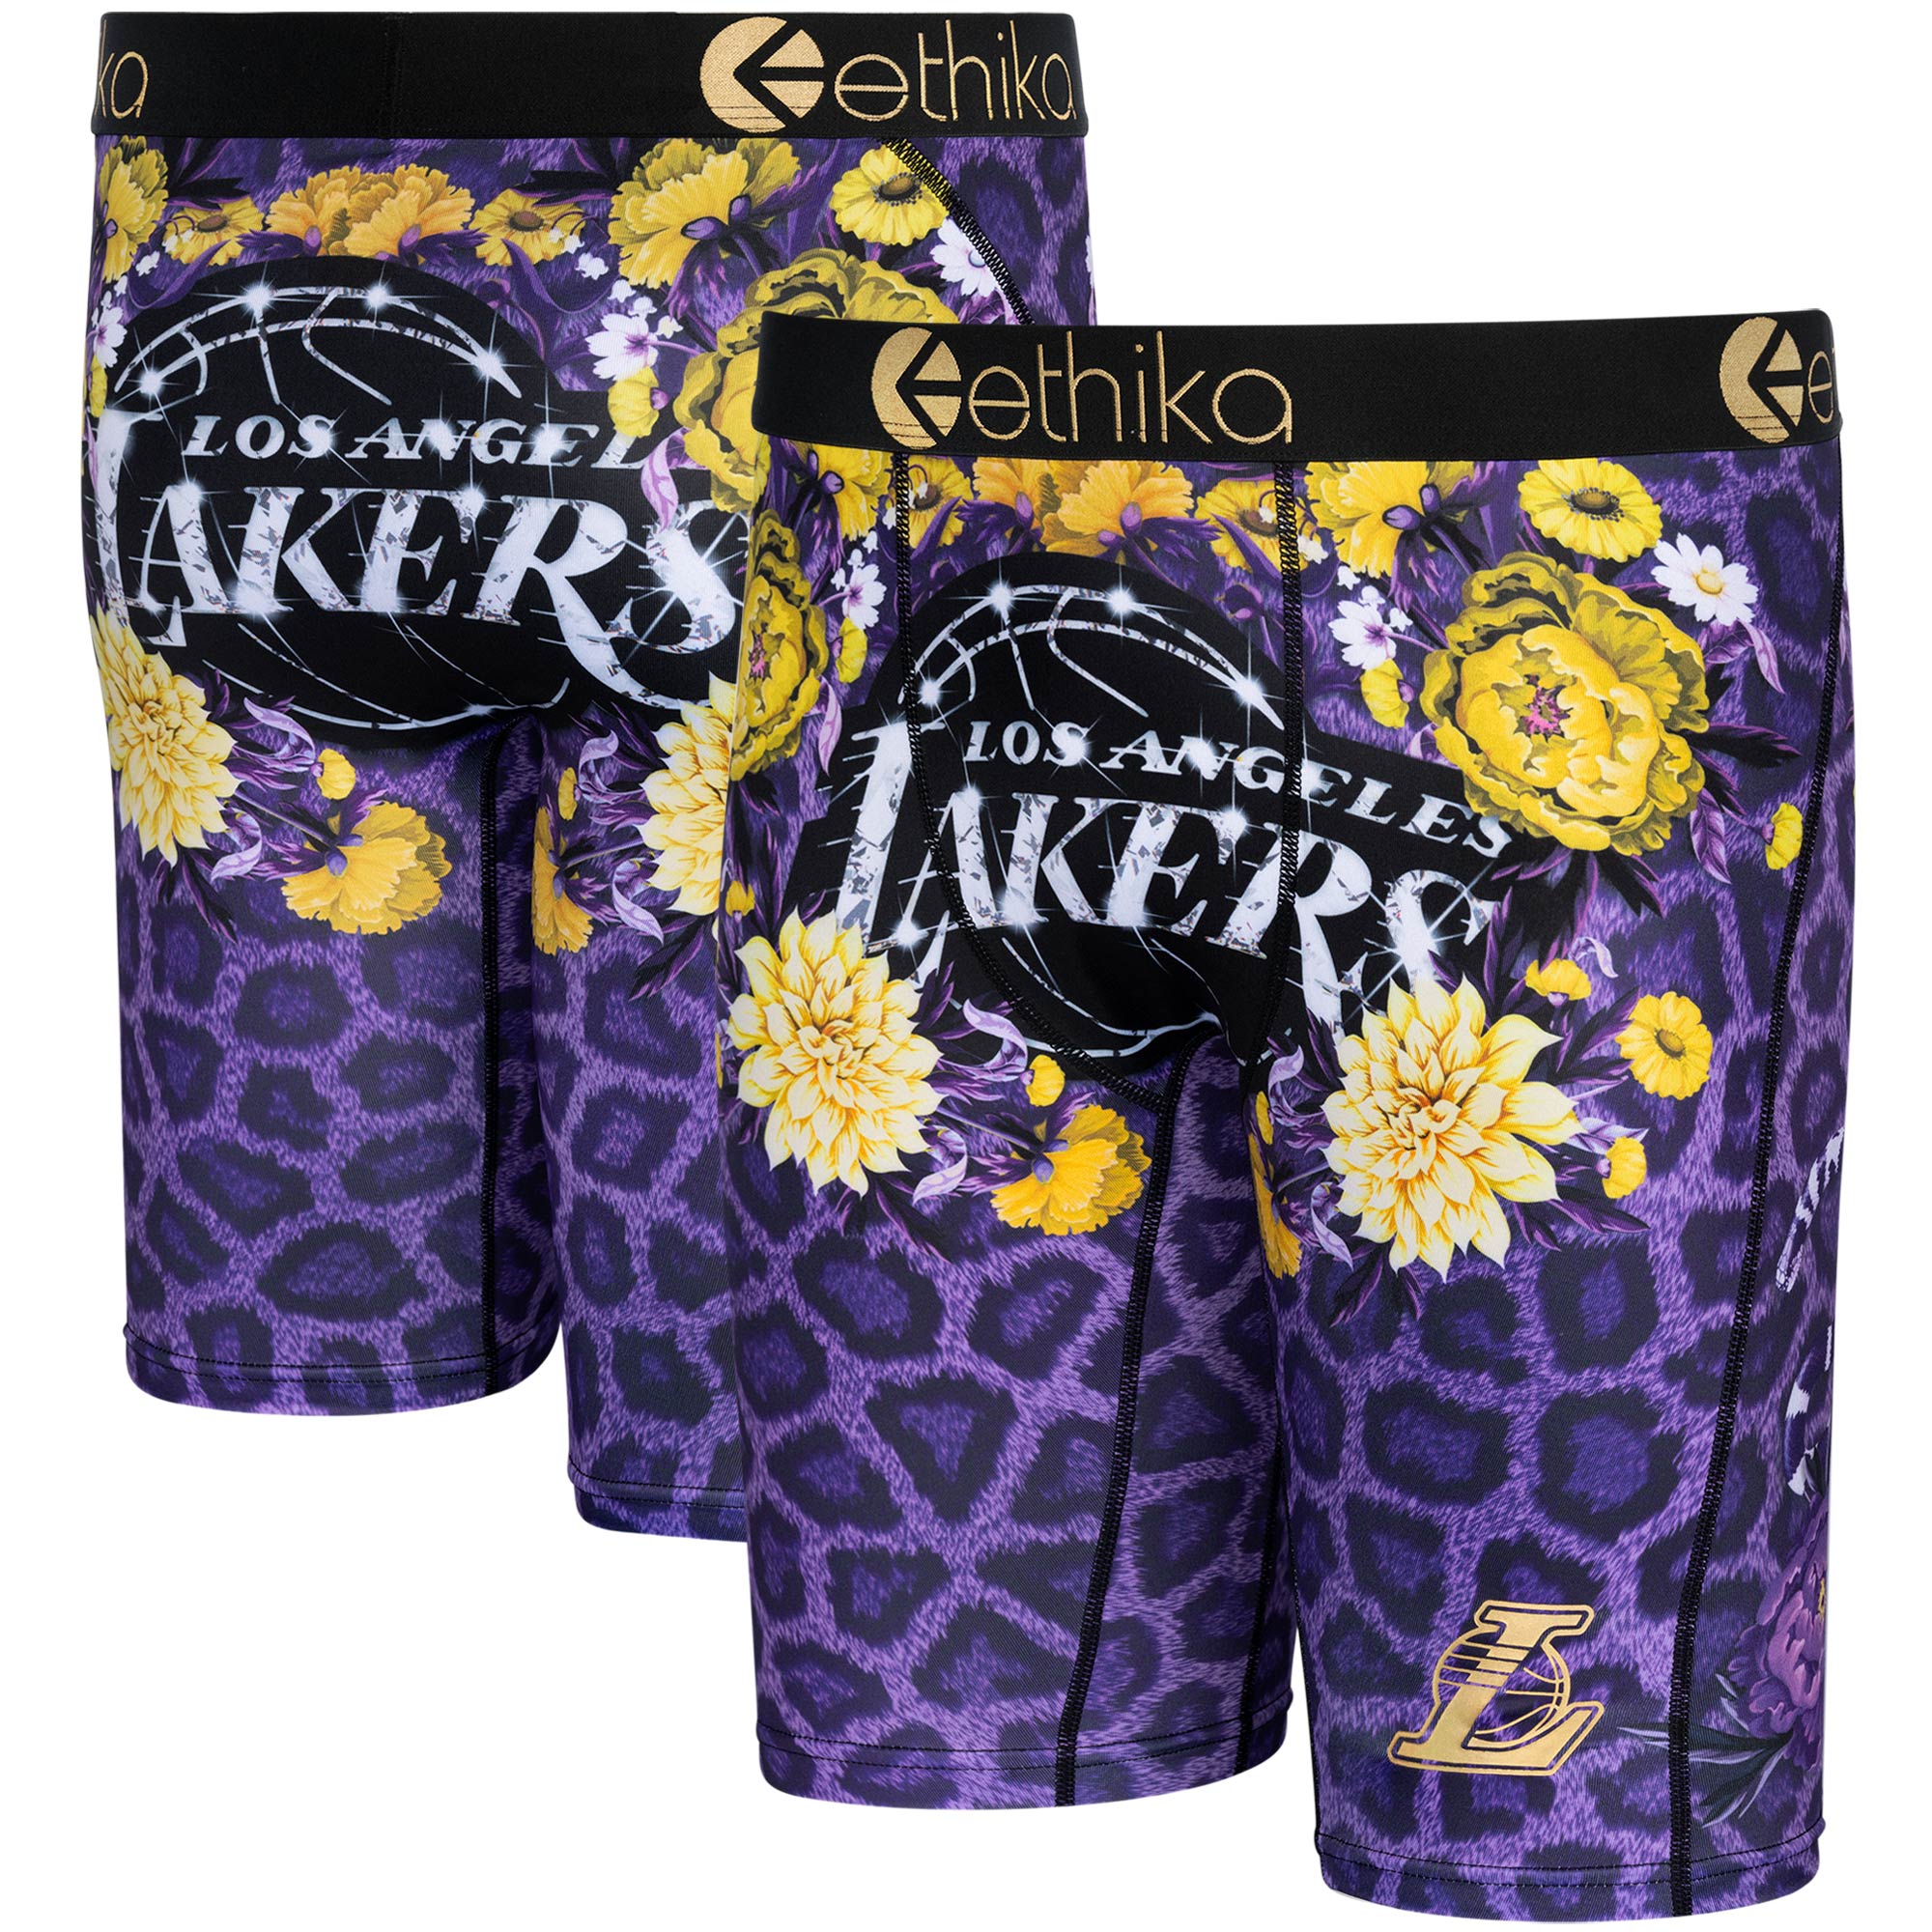 Los Angeles Lakers Ethika Fashion Bling Boxer Briefs Brazil